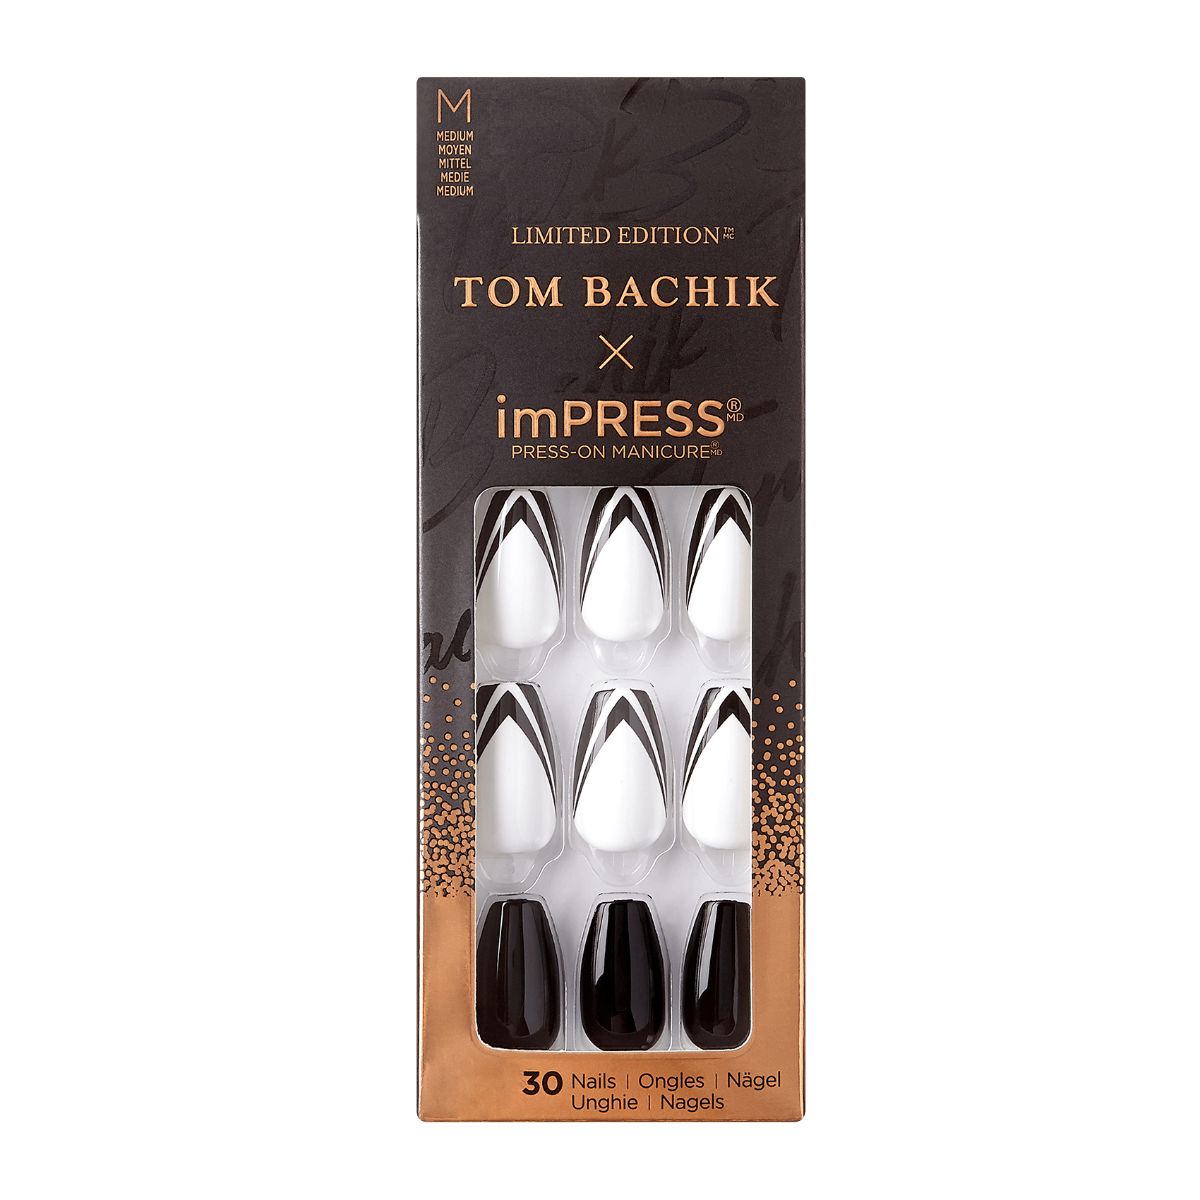 Tom Bachik x imPRESS Press-On Manicure Limited Edition Collection | KISS, imPRESS, JOAH